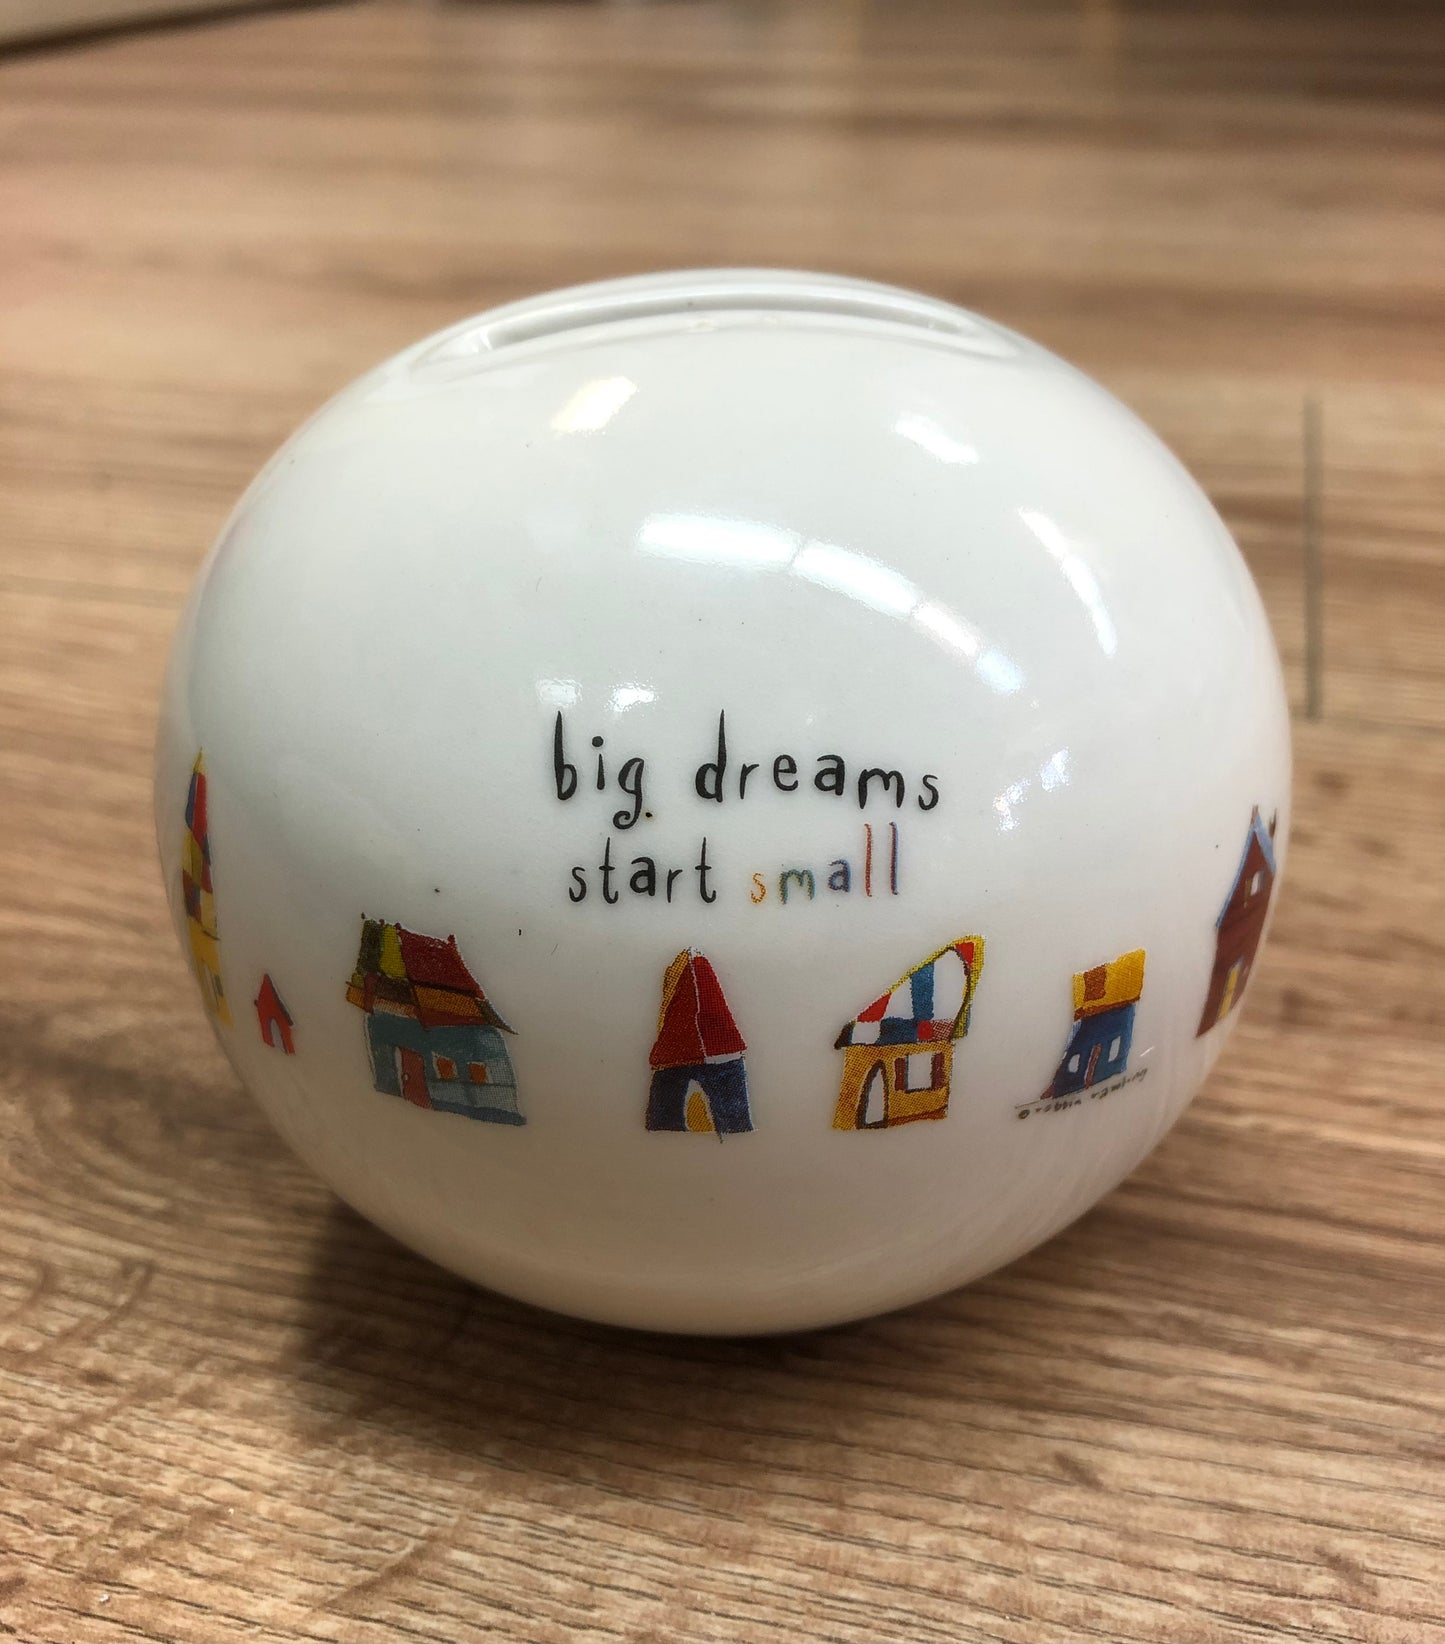 Big dreams start small ceramic bank